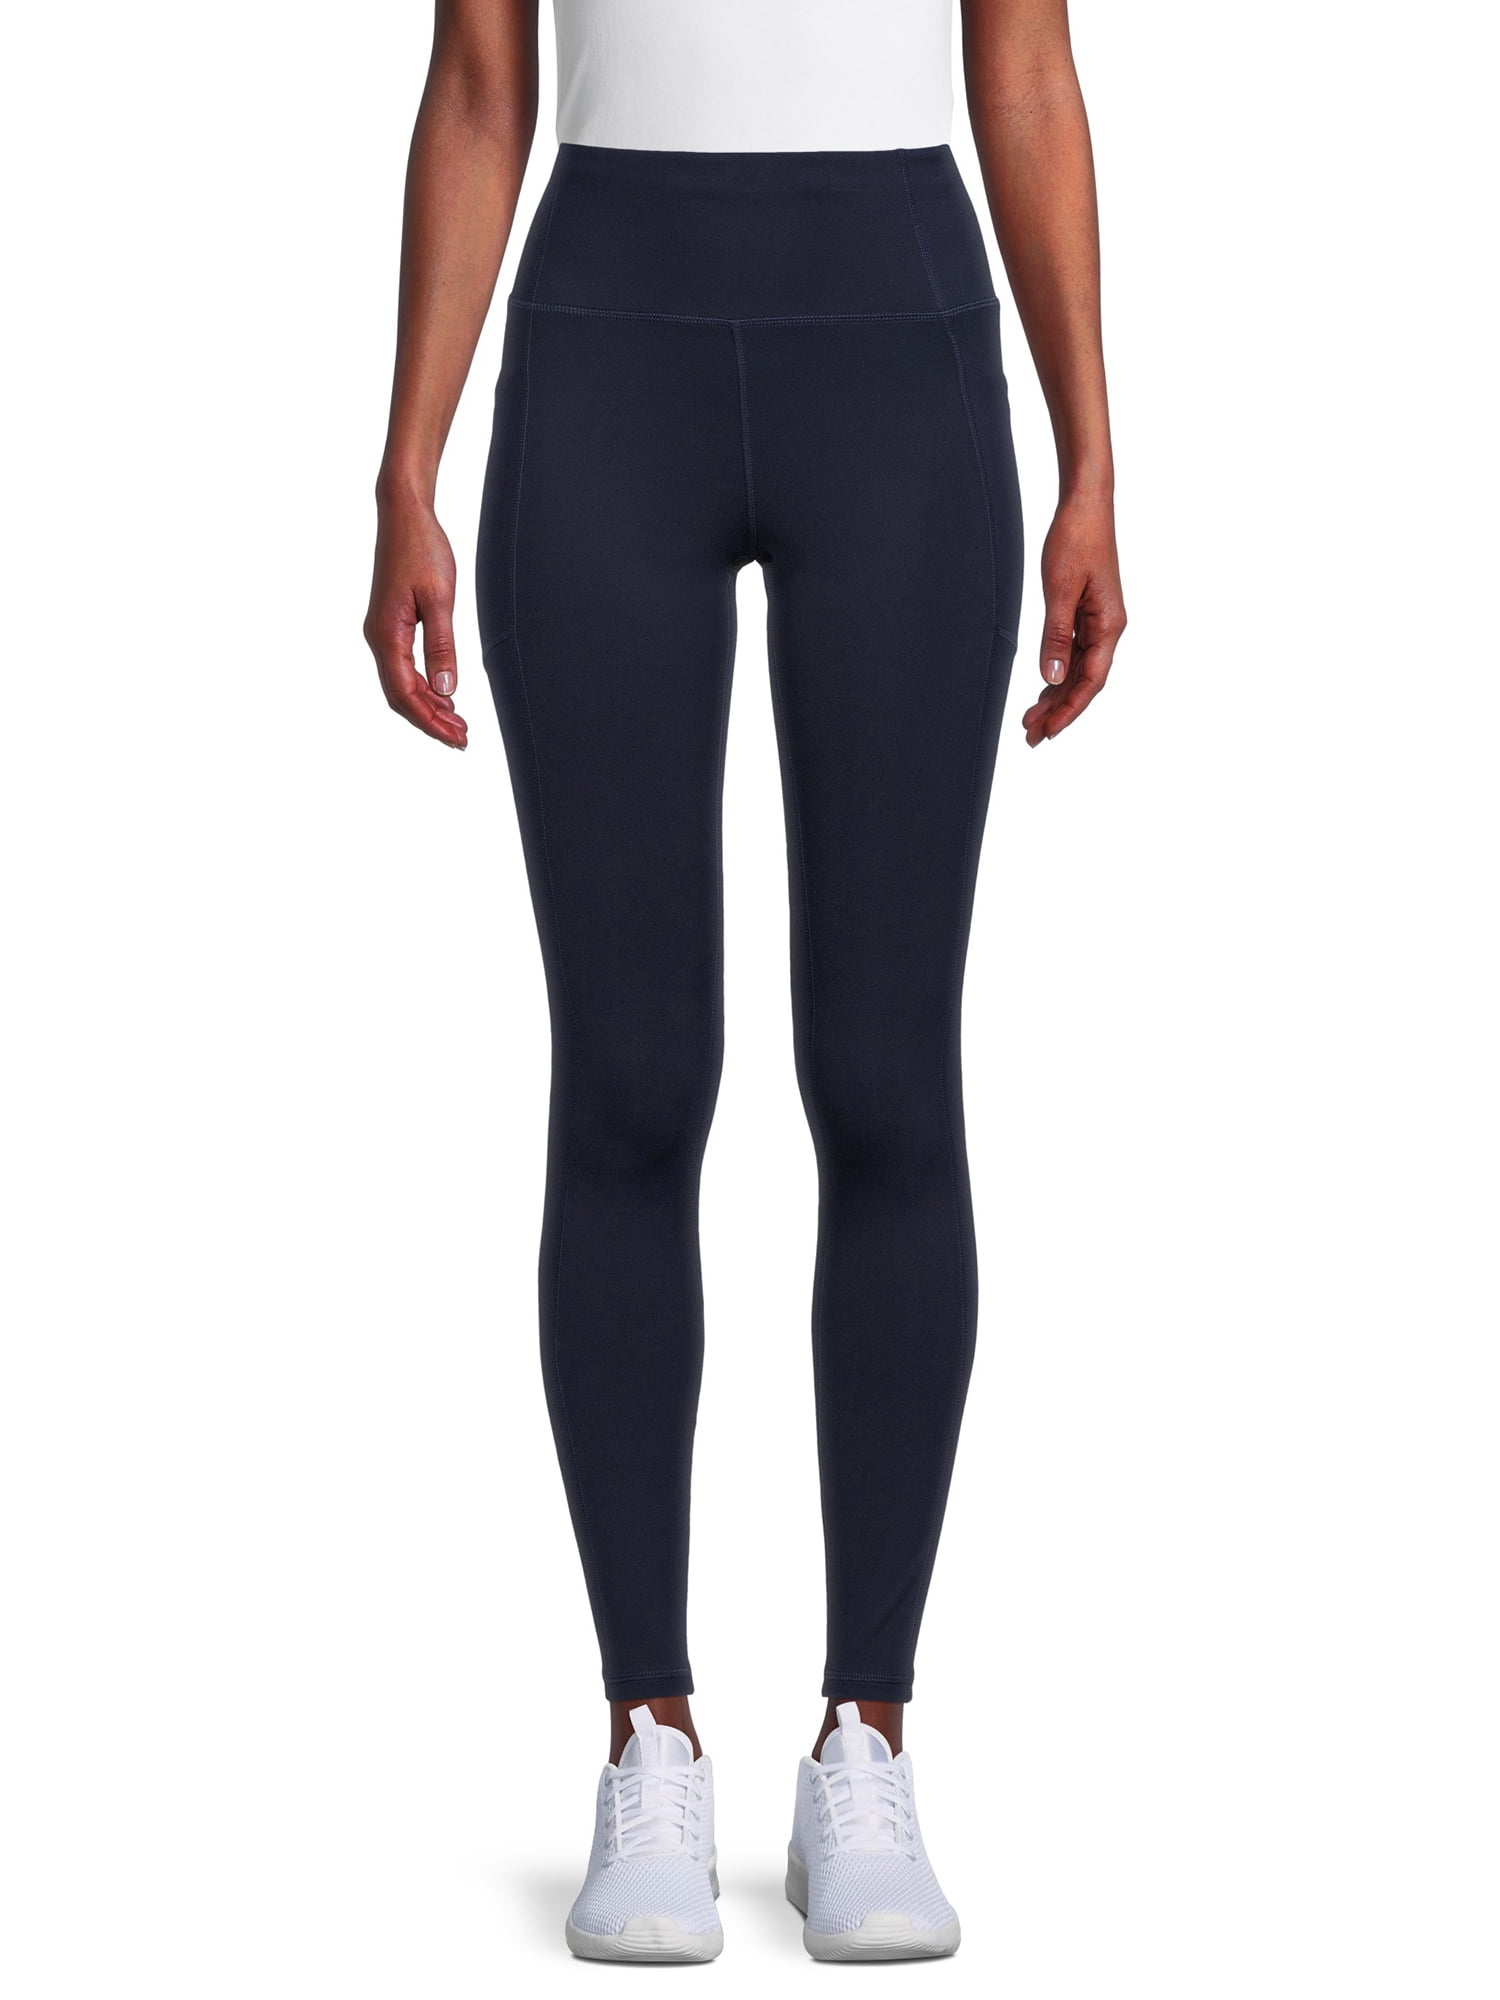 Pants & Jumpsuits  Avia Capri Black Leggings With 2 Side Pockets